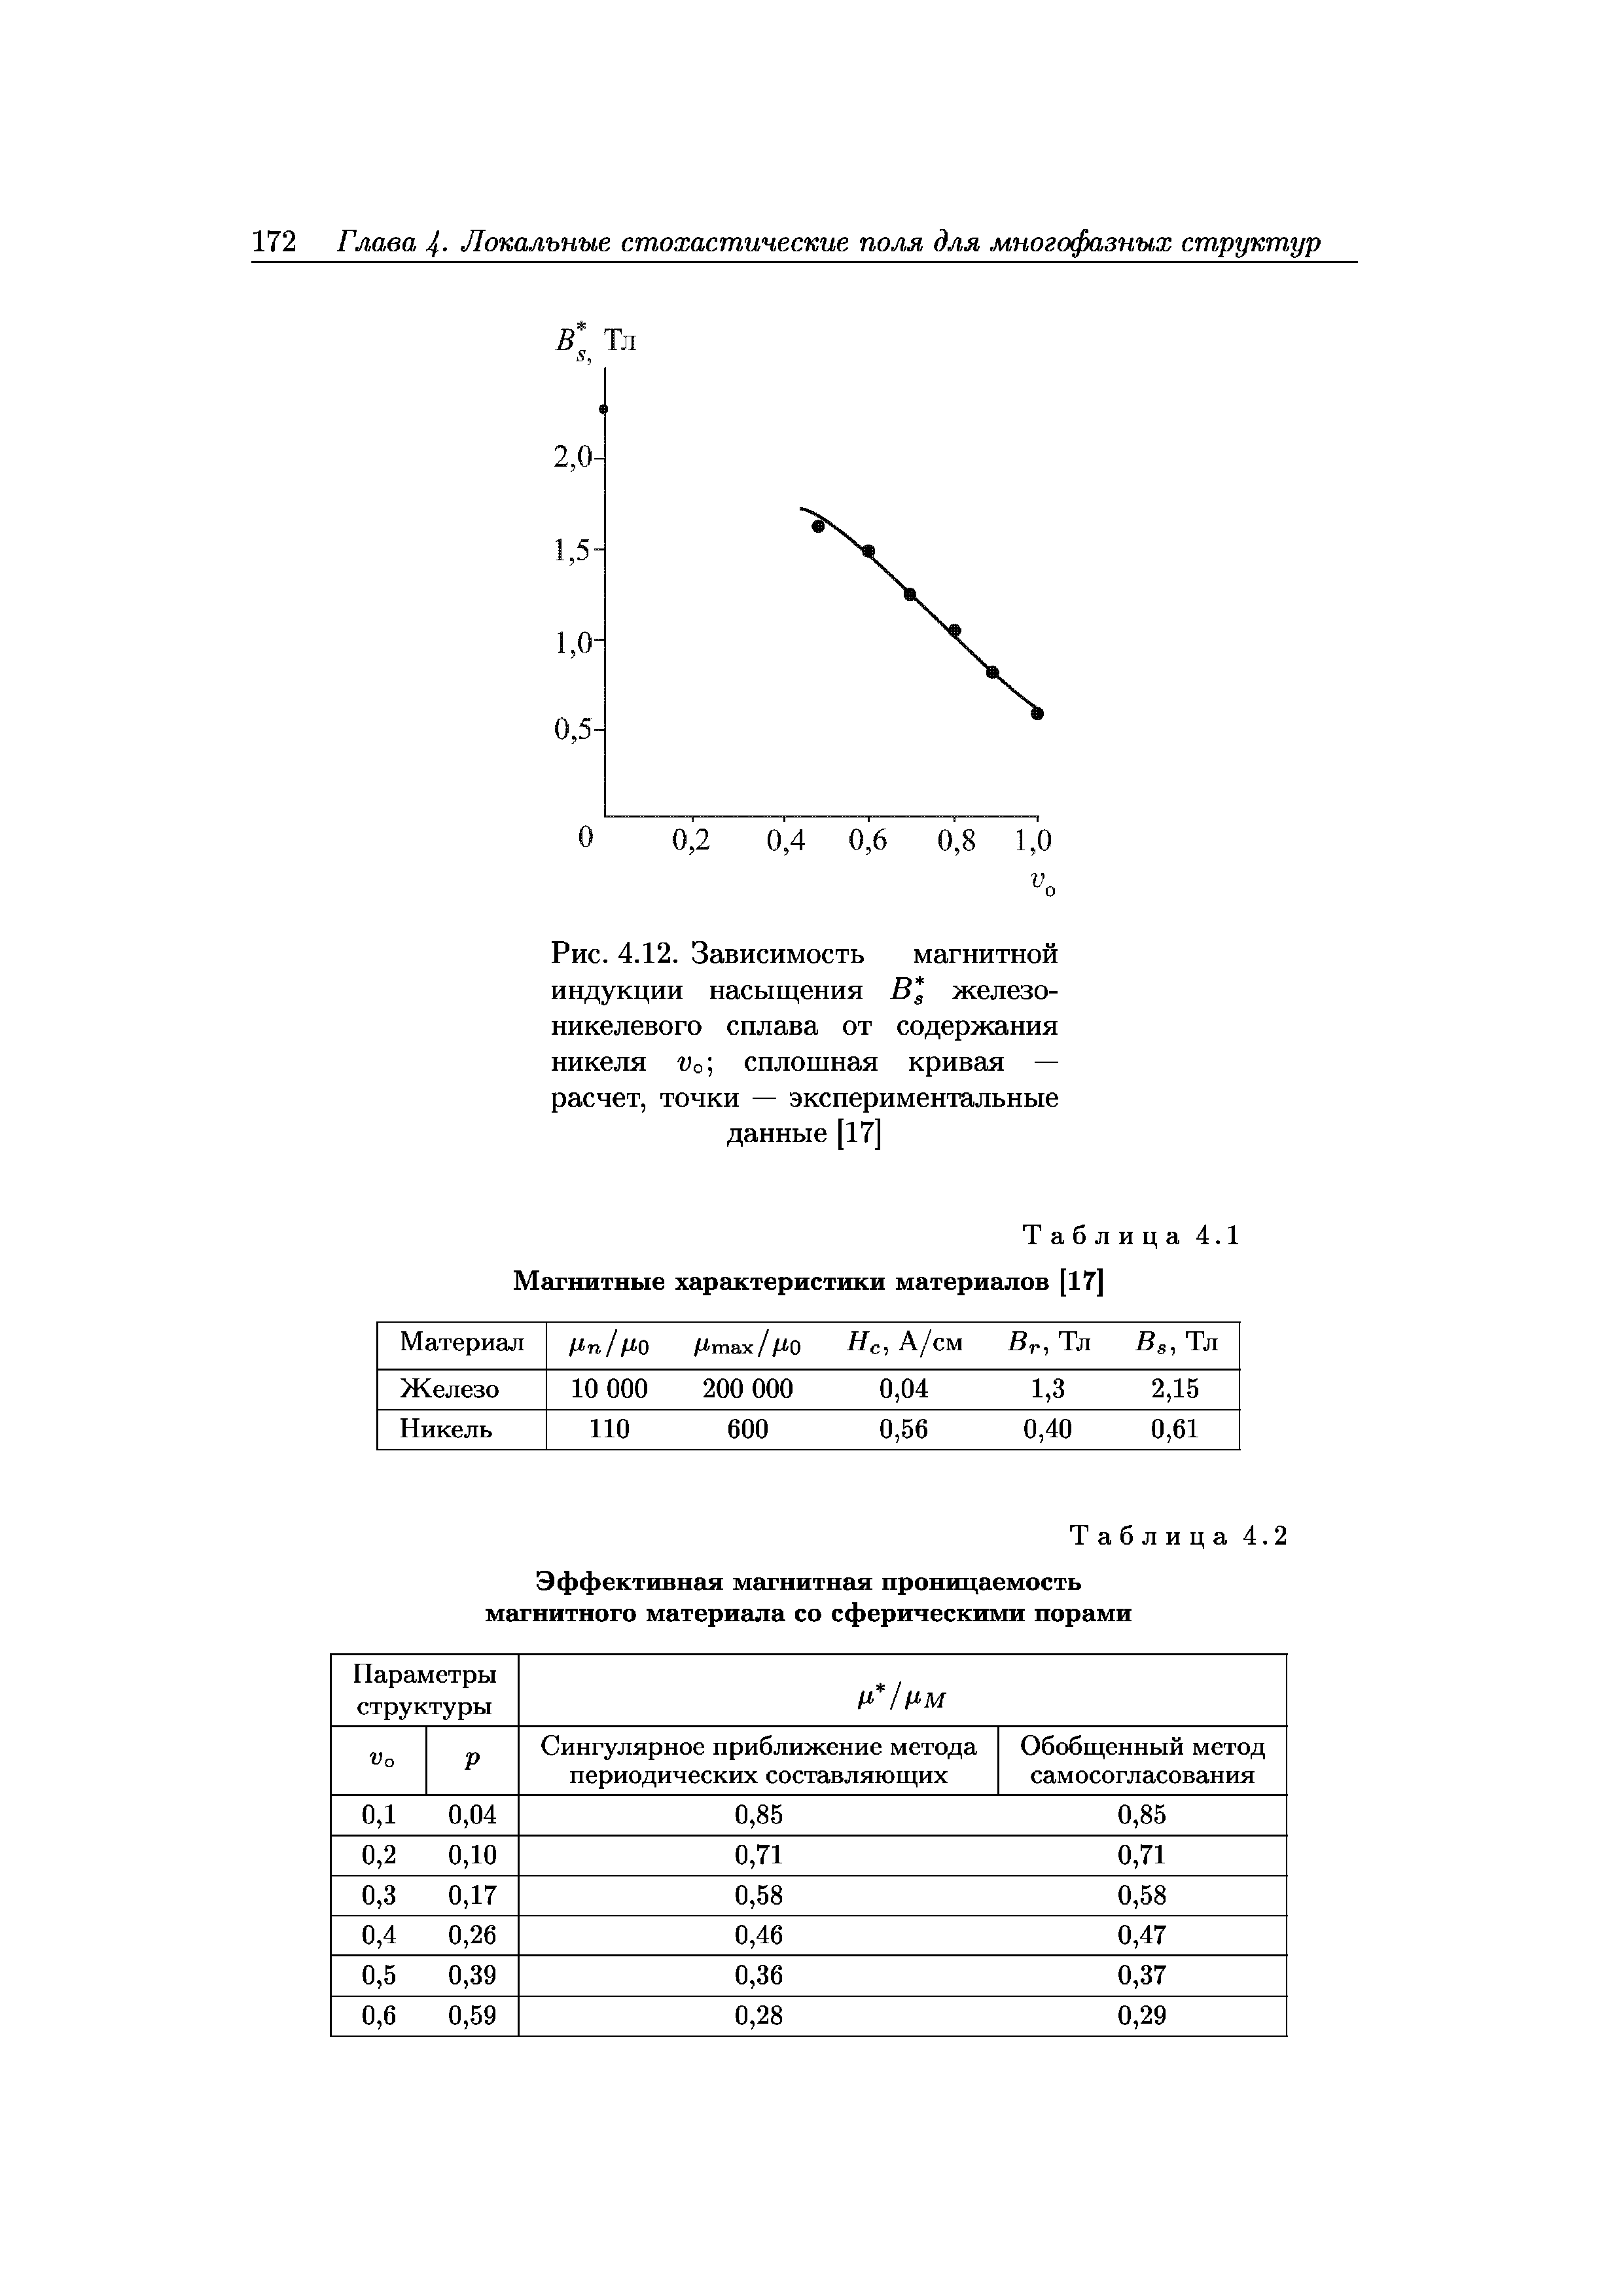 Таблица 4.1 <a href="/info/400406">Магнитные характеристики</a> материалов [17]
